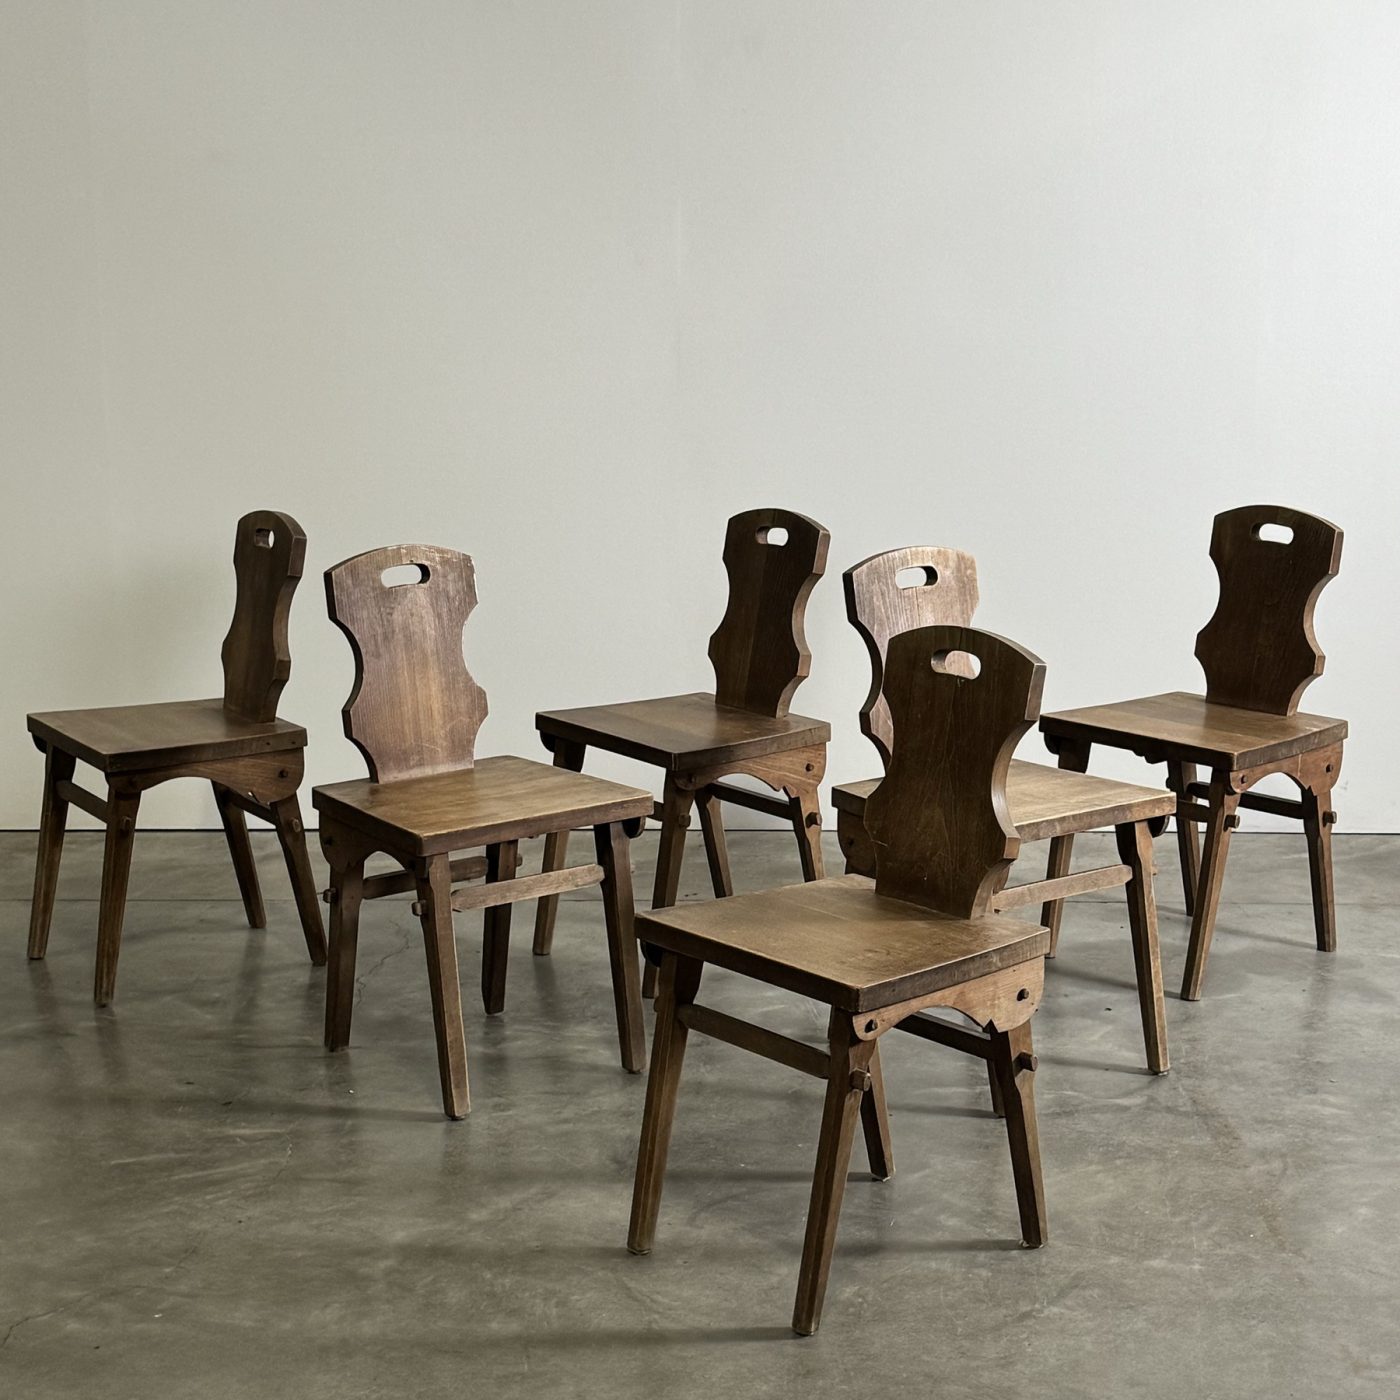 objet-vagabond-rustic-chairs0010